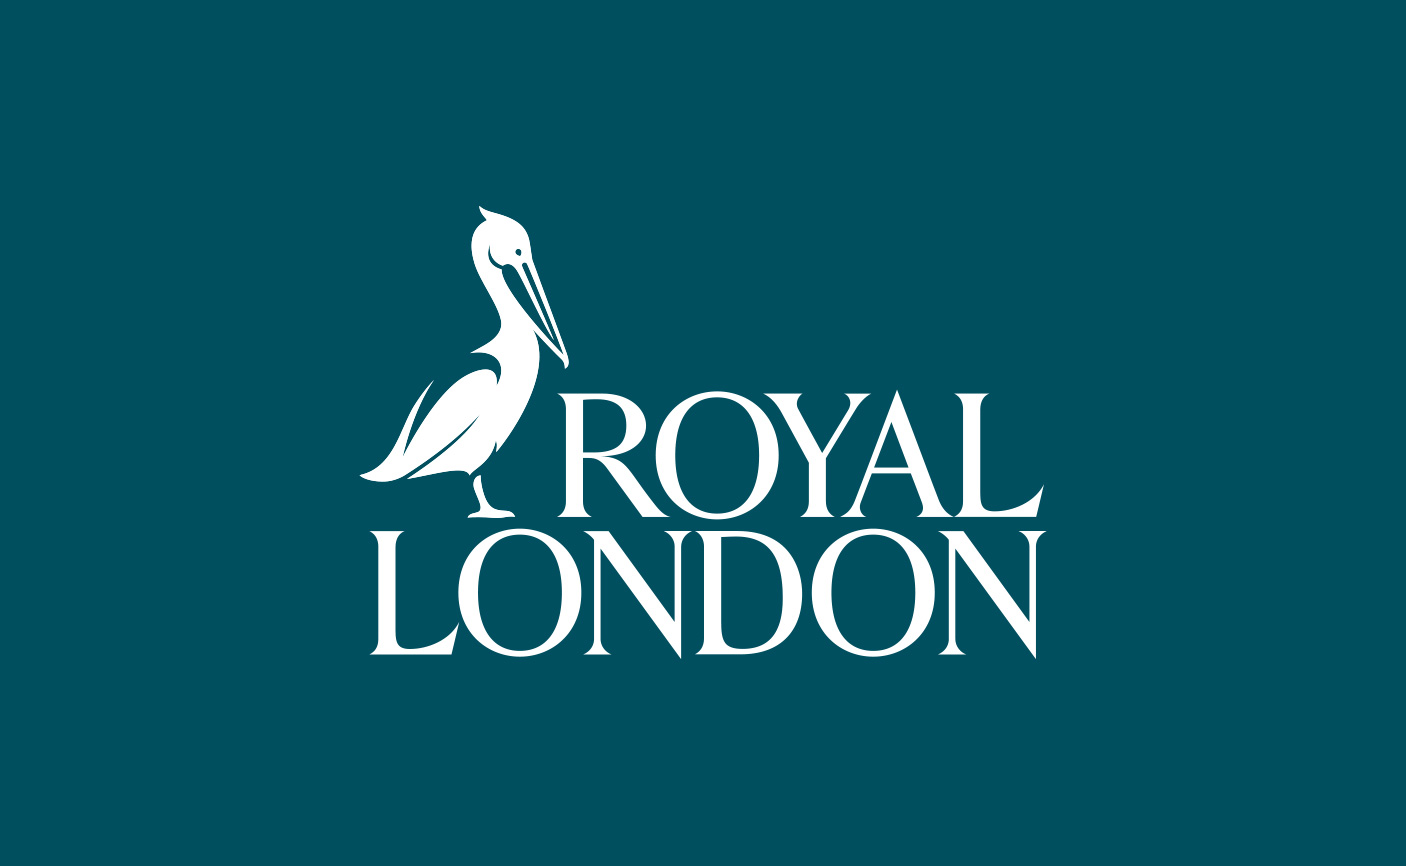 royal london - master data management for insurance